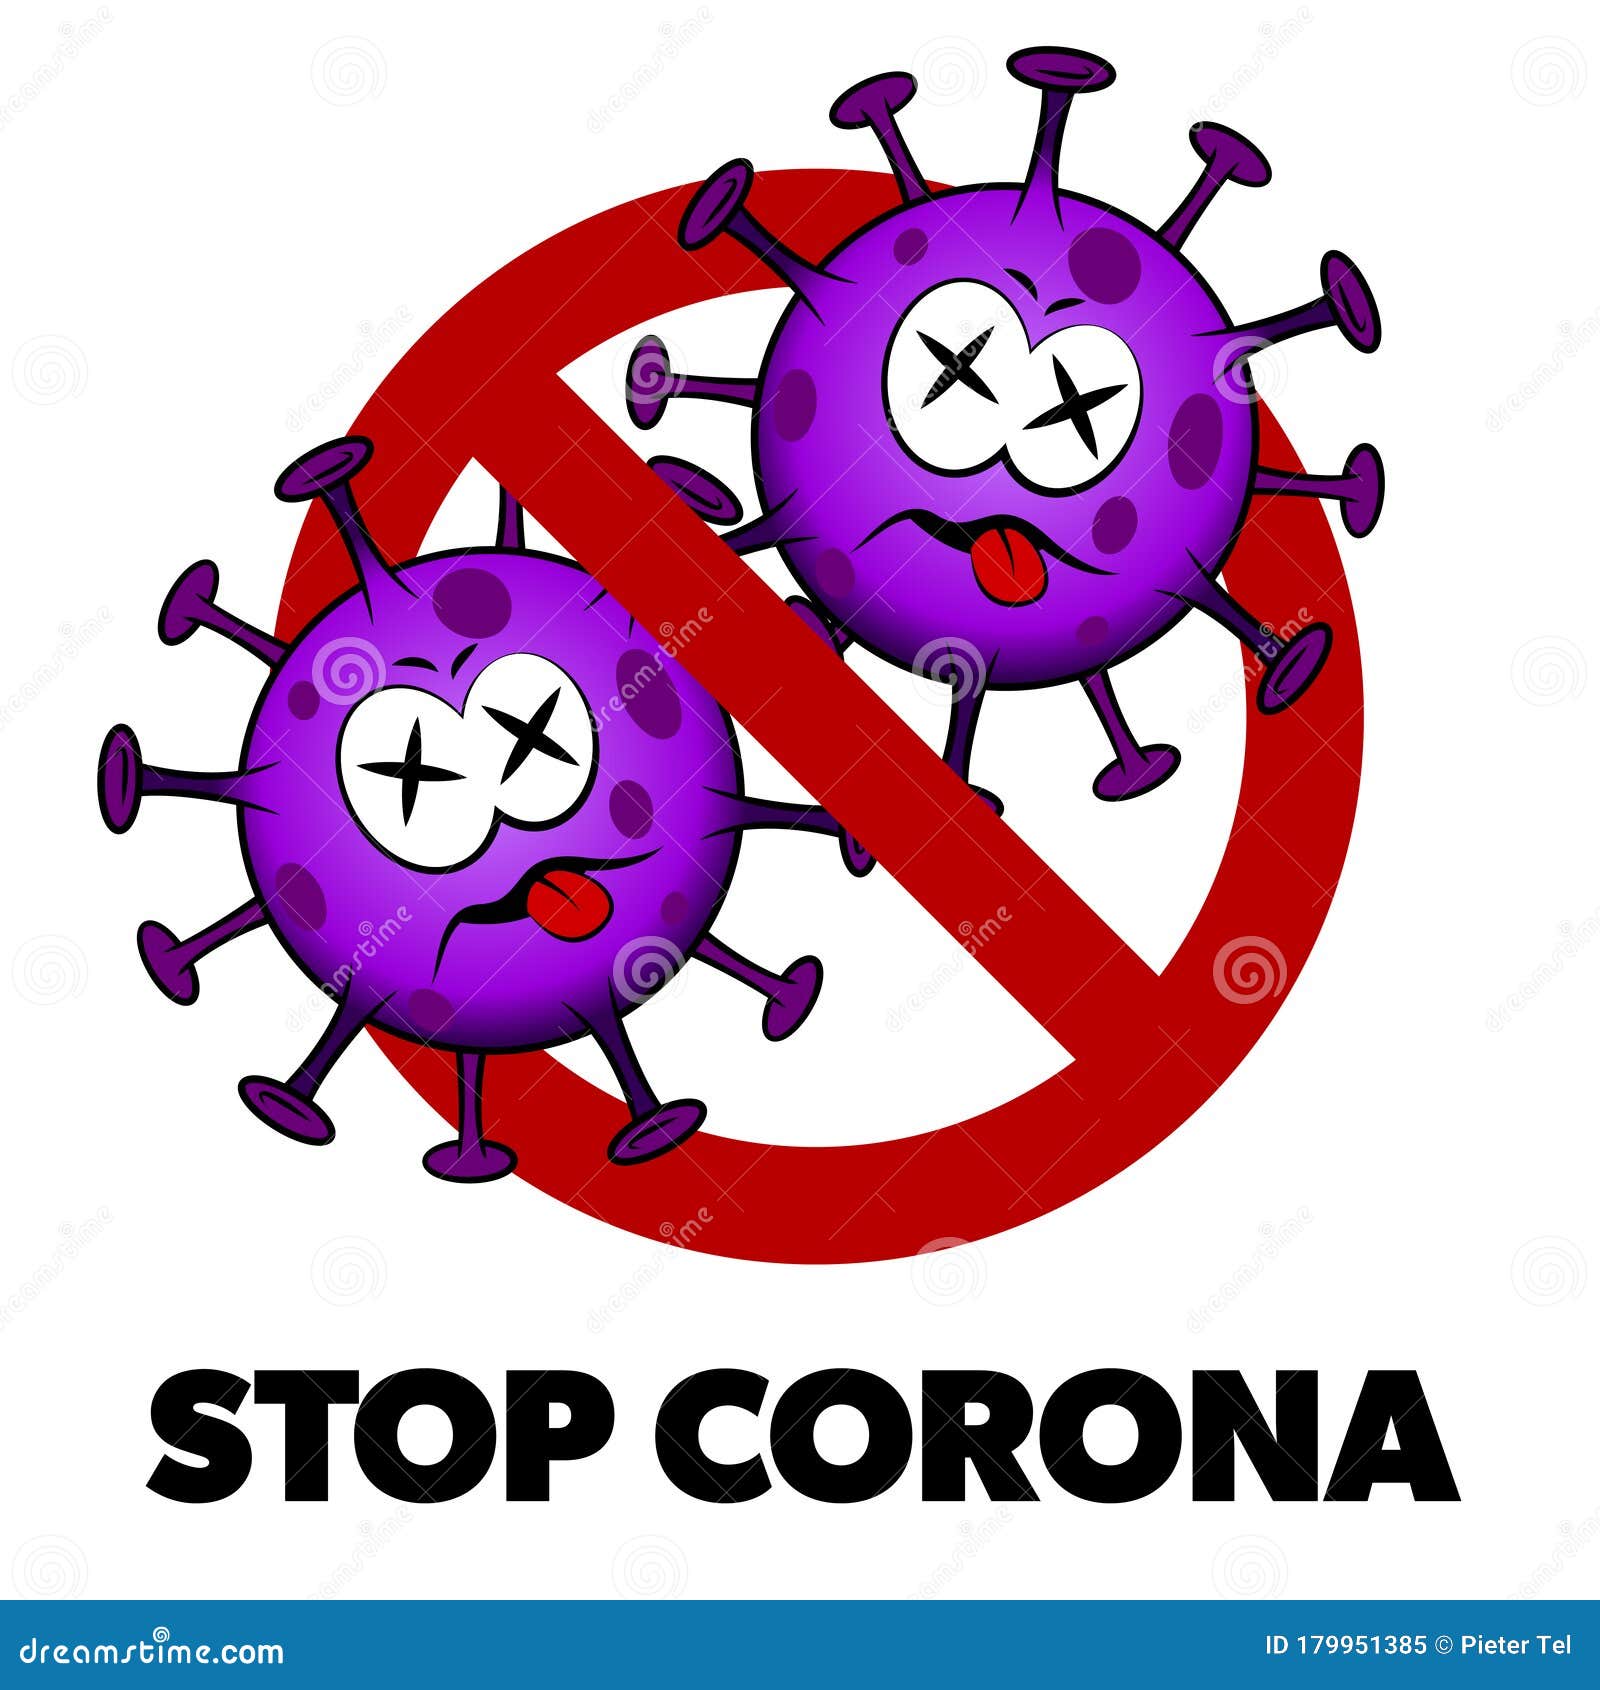 stop corona cartoon style sign, dead covid-19